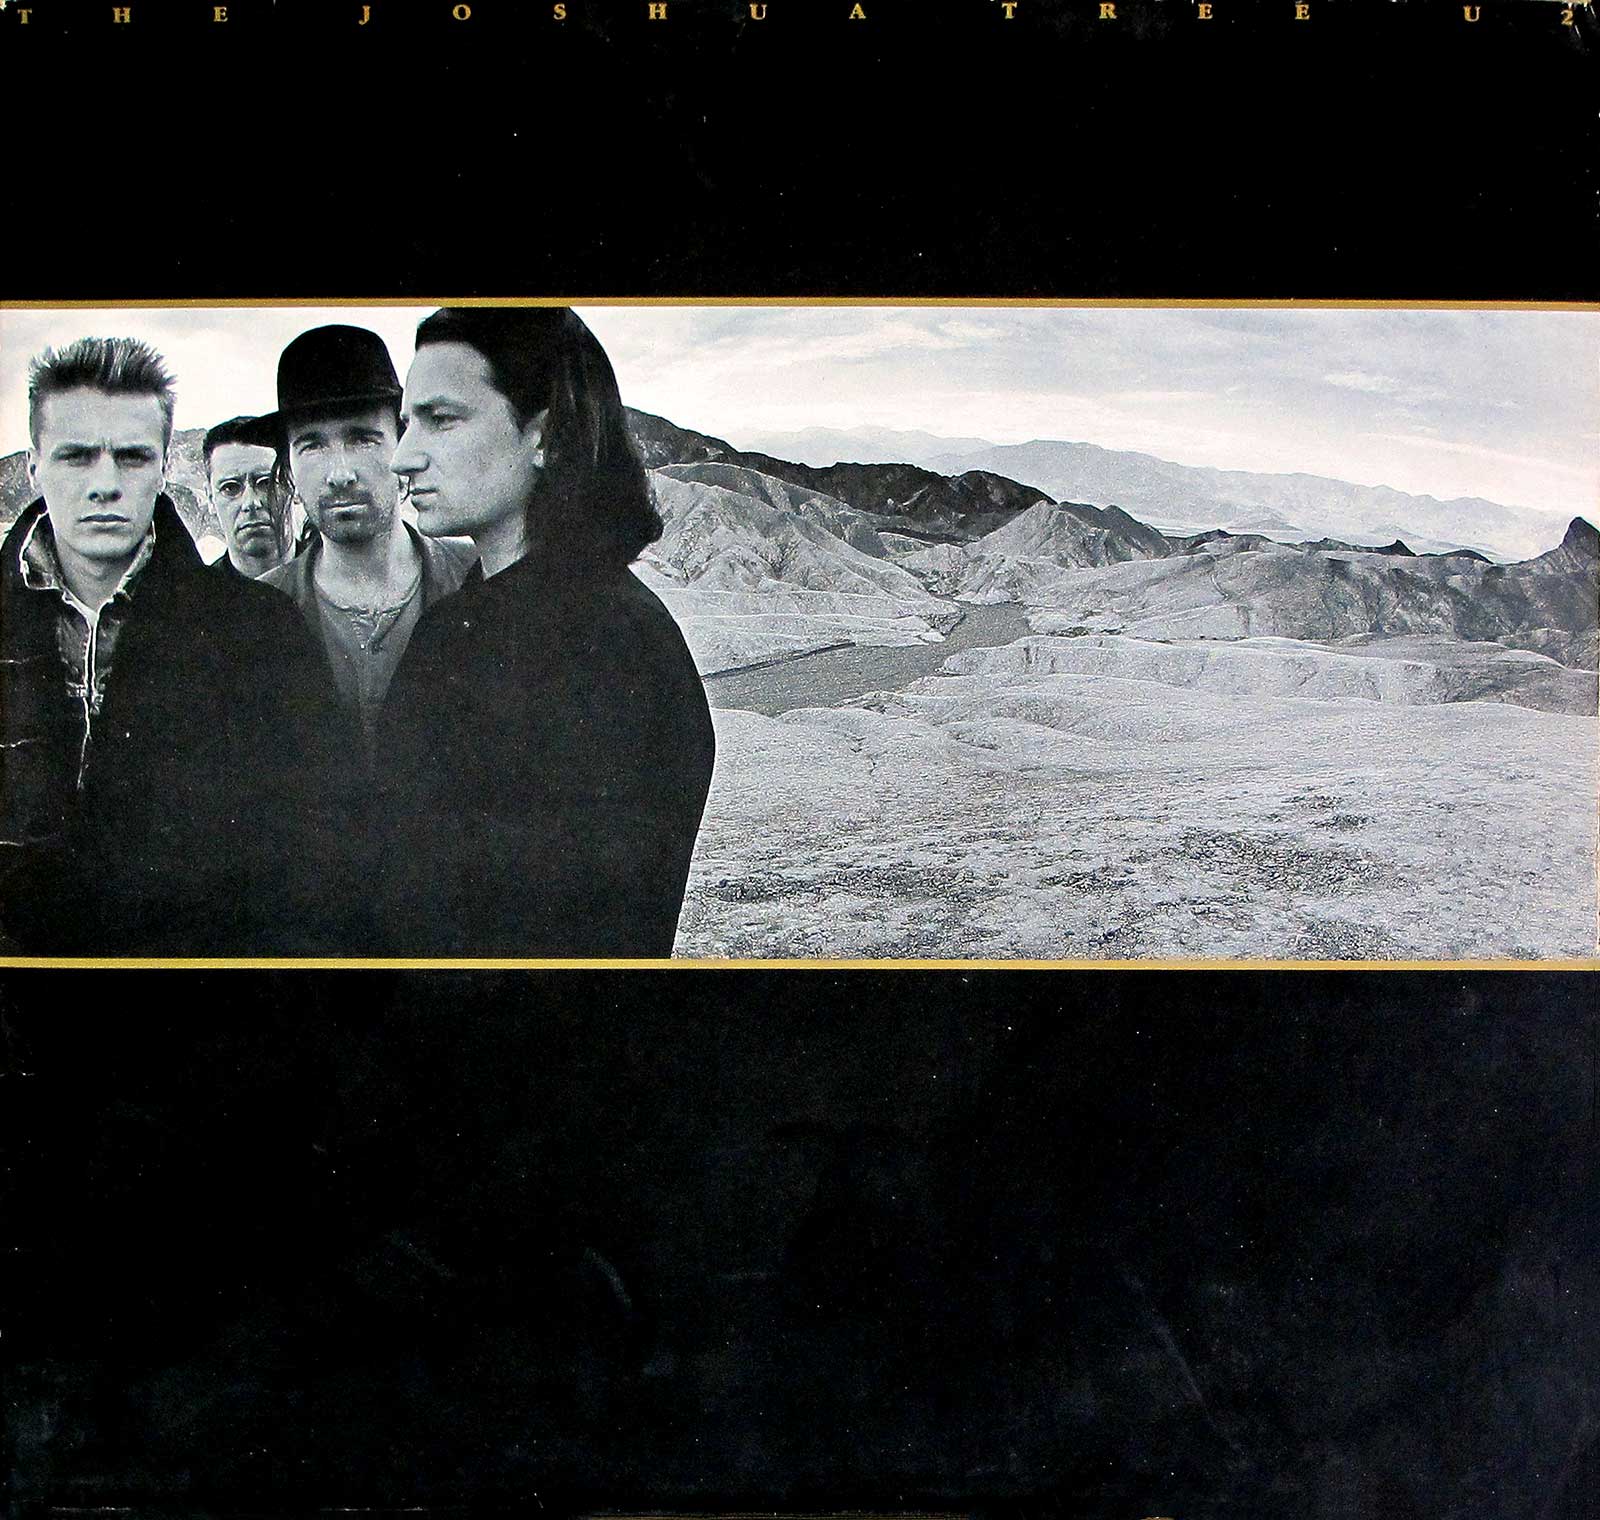 large album front cover photo of: U2 - JOSHUA TREE BRIAN ENO Gatefold + PHOTO / LYRICS SHEET 12" LP VINYL ALBUM 